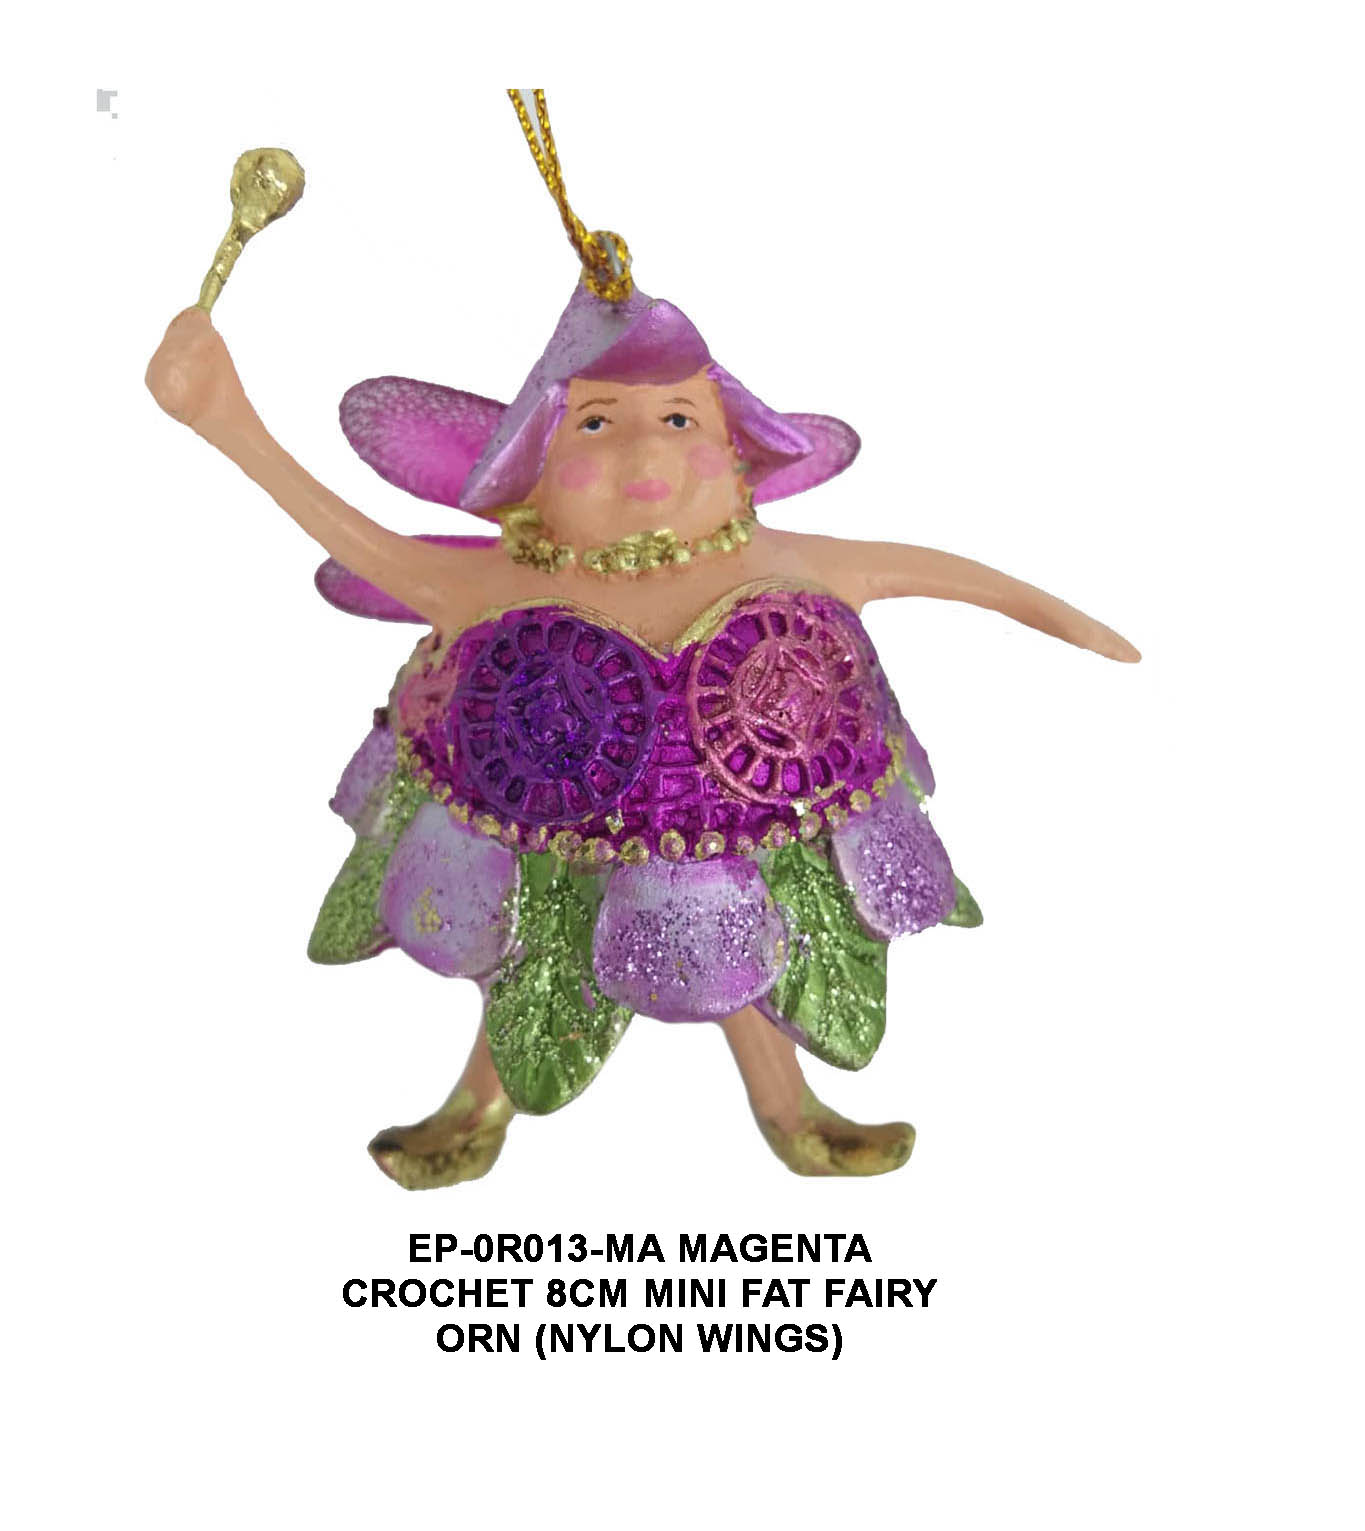 Magenta Crochet Miniature Fat Fairy EP-0R013-MA